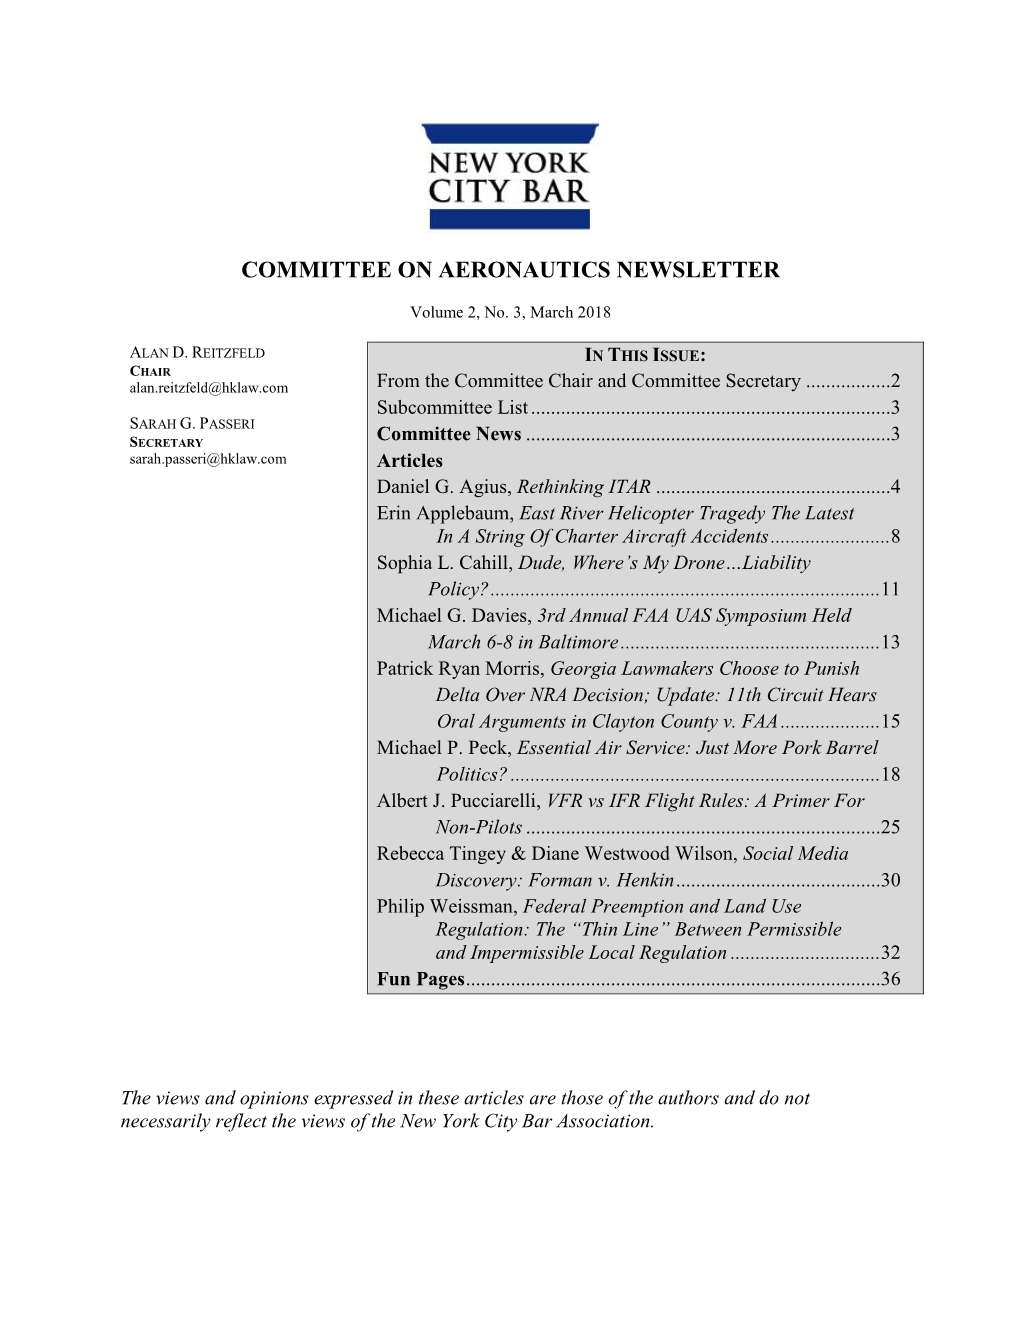 Committee on Aeronautics Newsletter